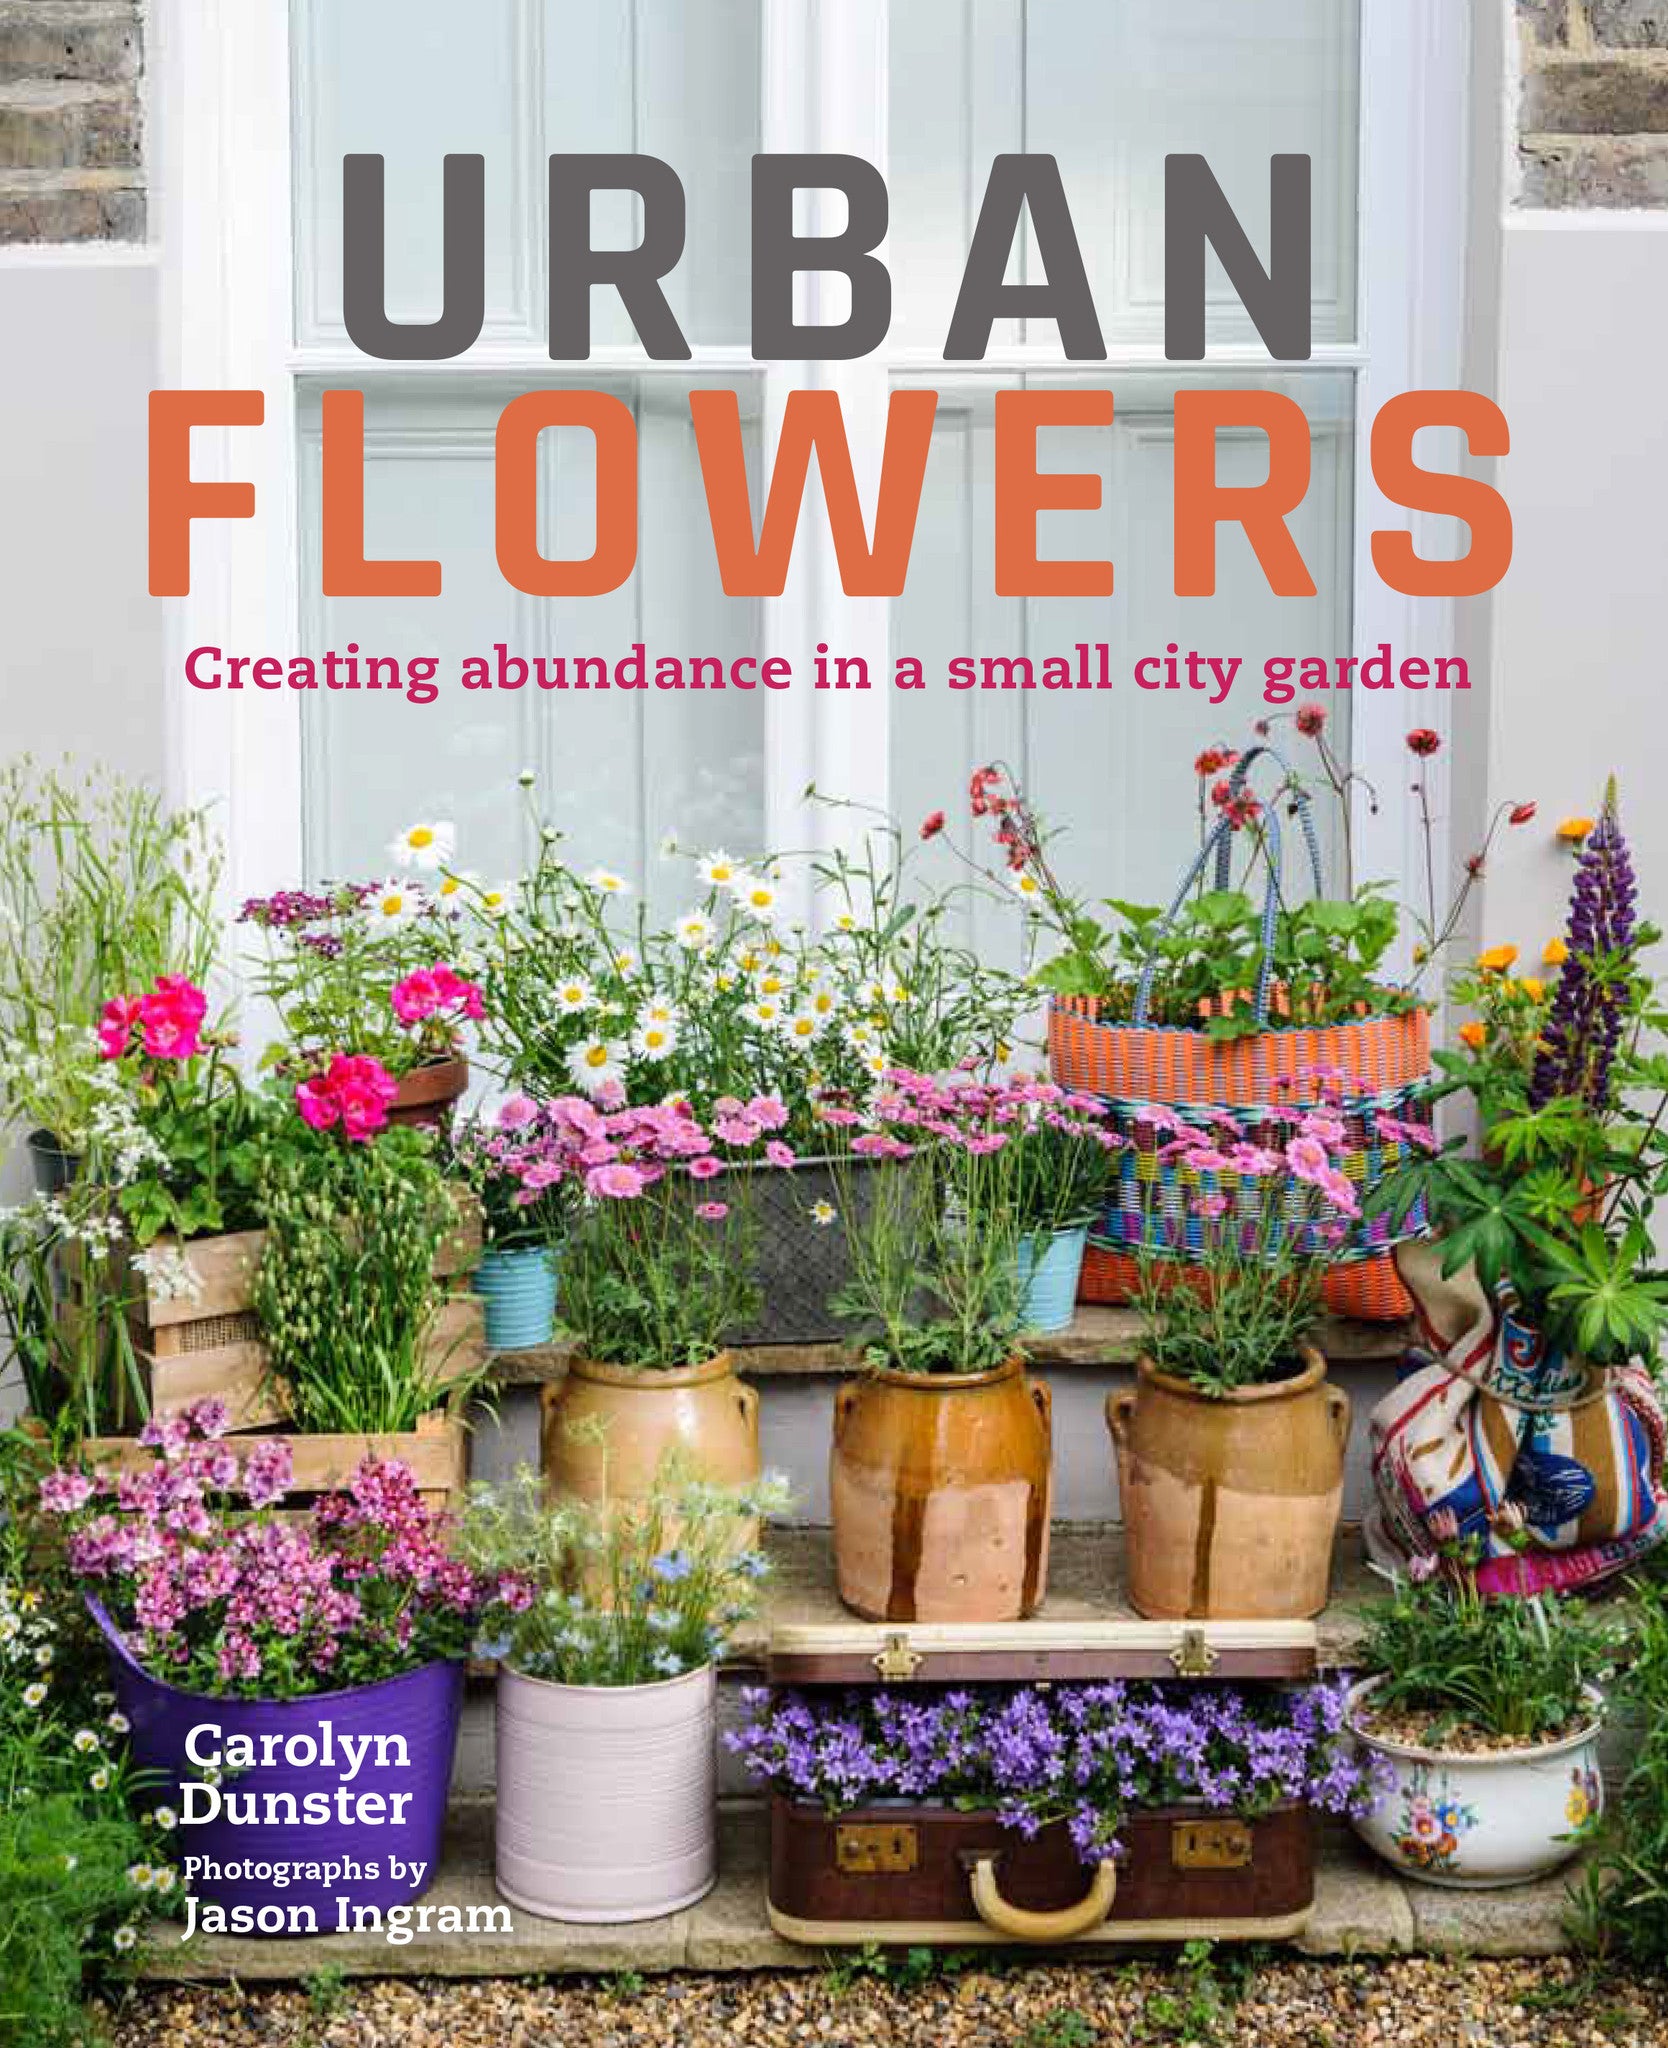 Urban Flowers by Carolyn Dunster